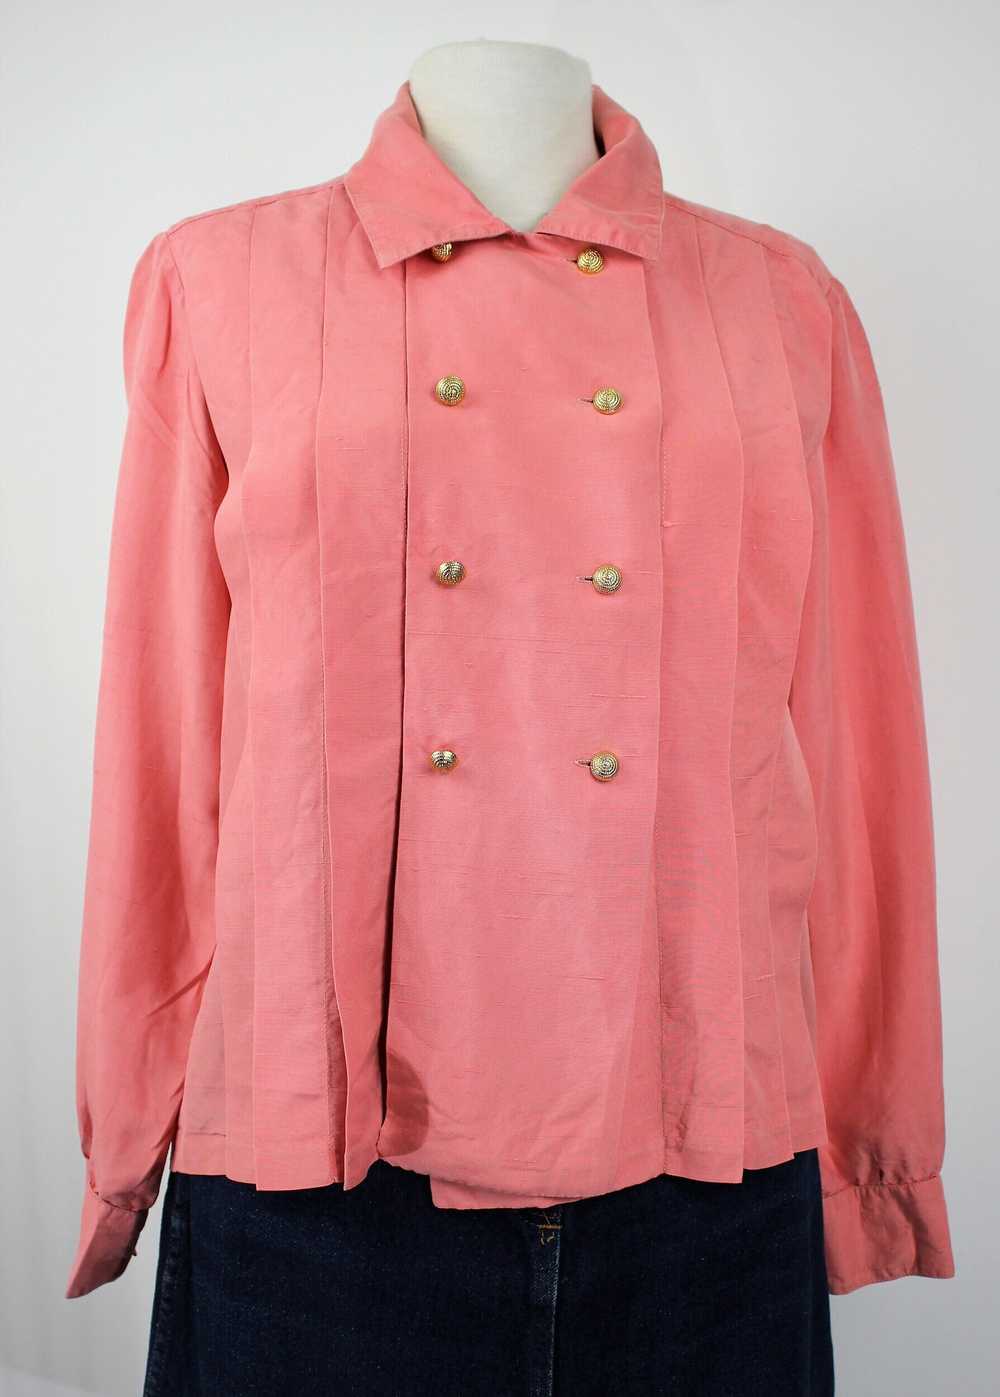 Lanvin shirt - 80s silk blouse - image 7